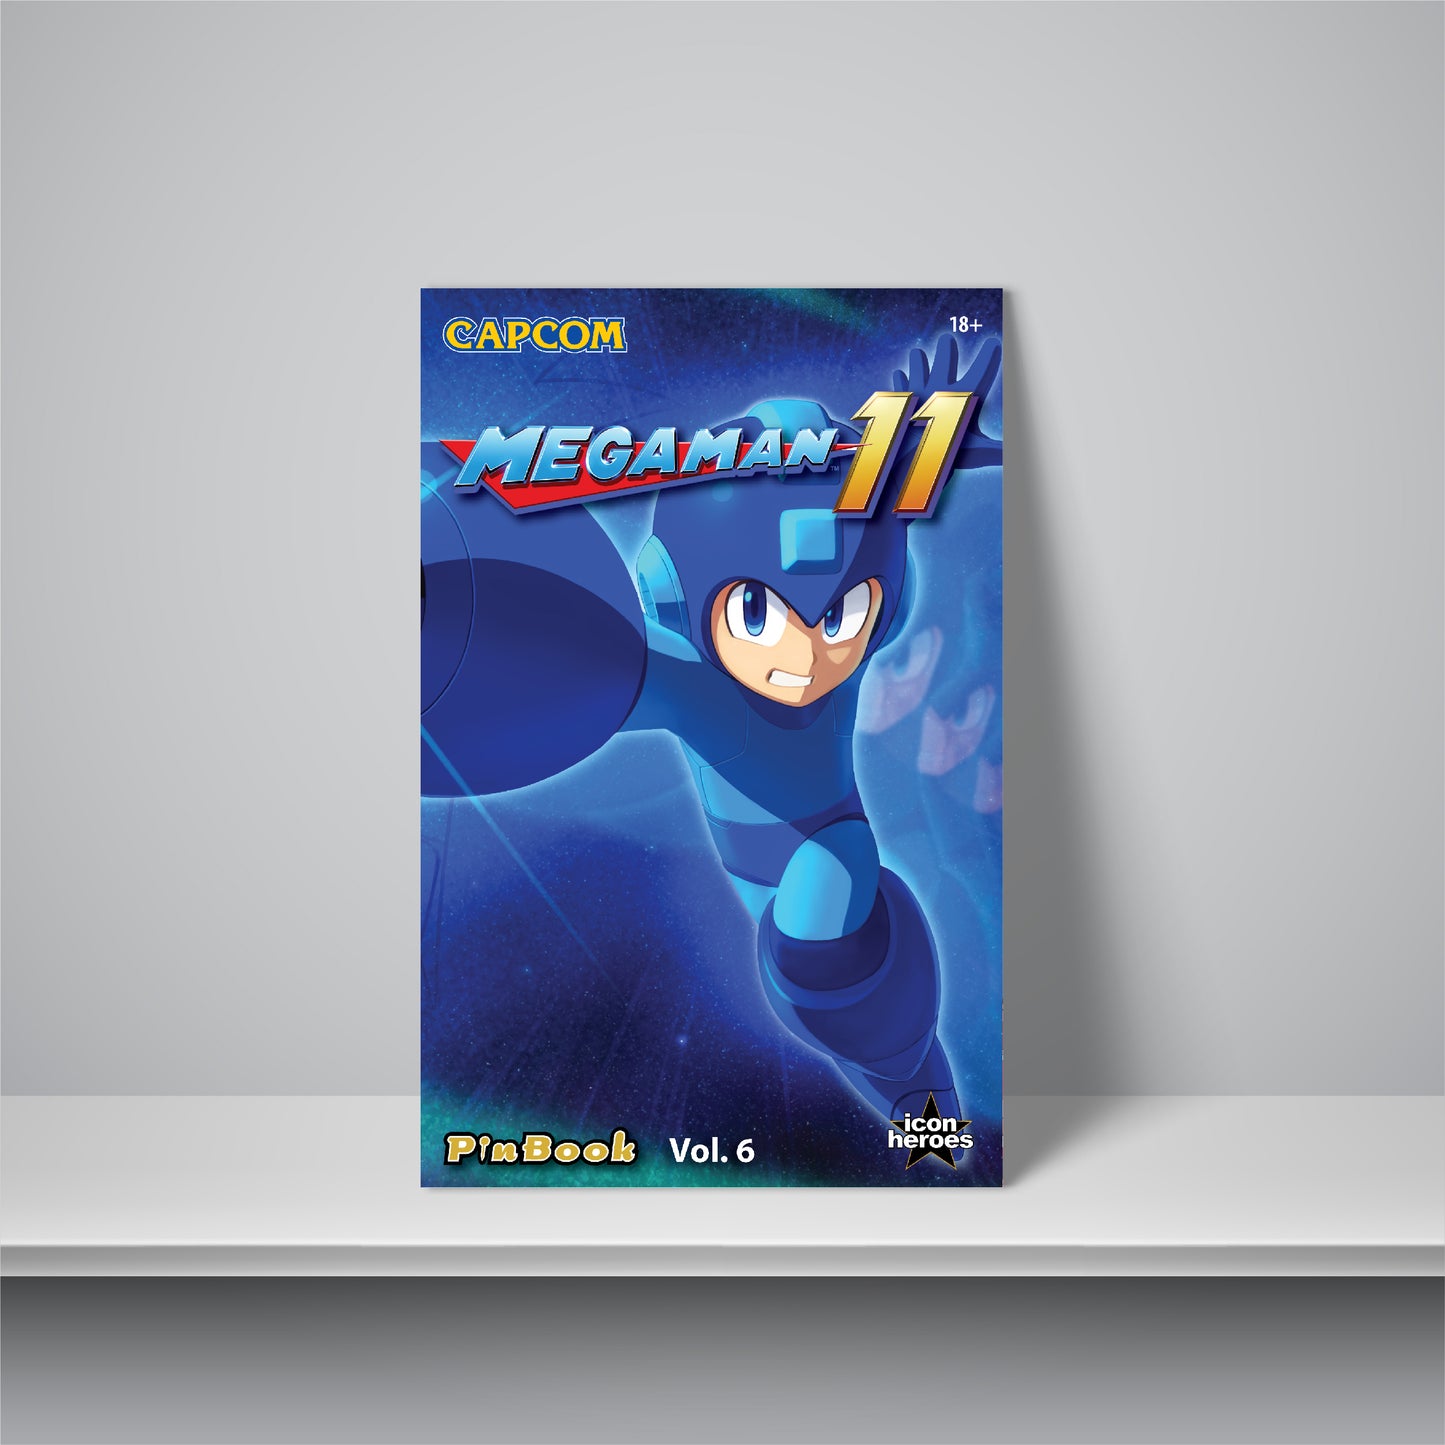 Mega Man 11 Enamel Pins PinBook Vol. 6 - Available 3rd Quarter 2021 - Icon Heroes 